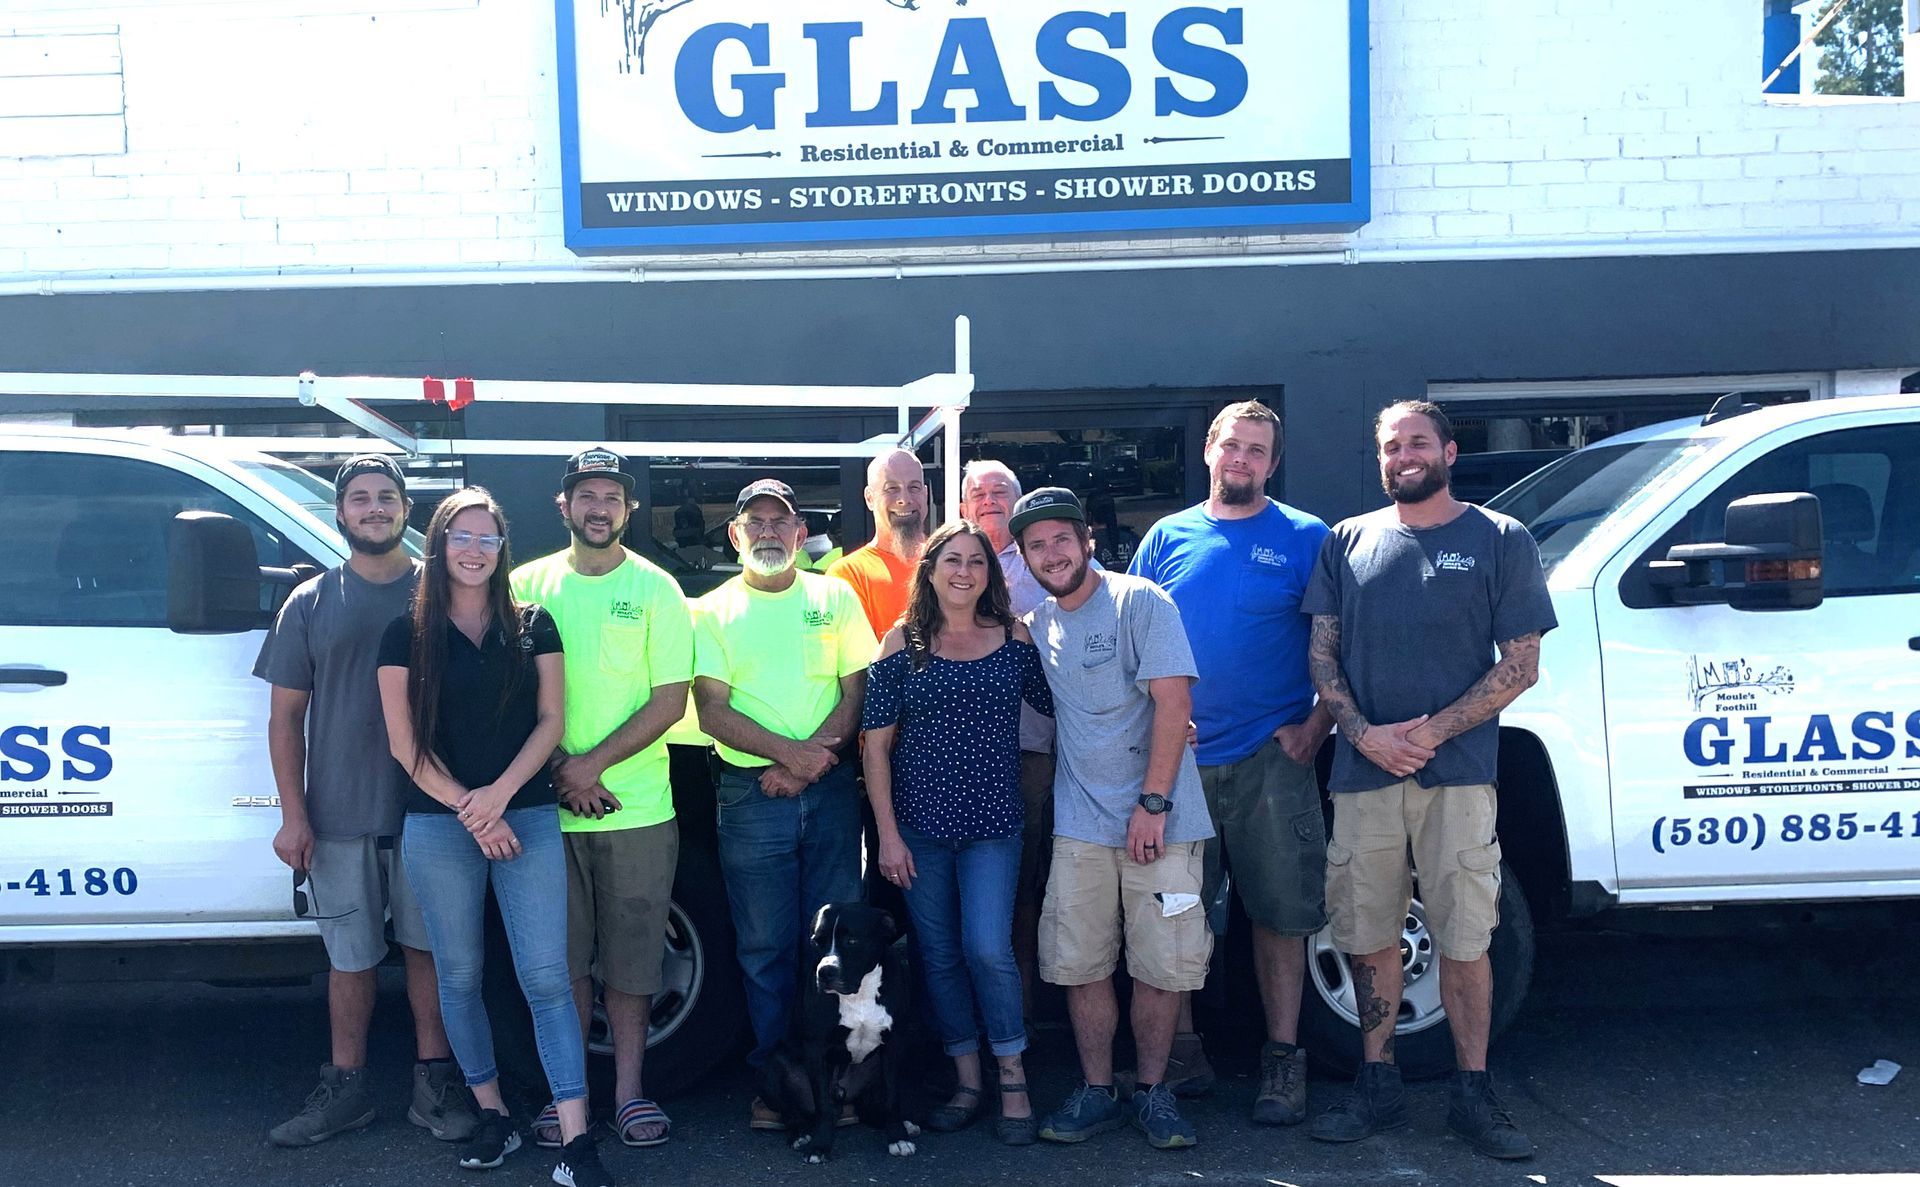 Glass Company - Auburn, CA - Moule's Foothill Glass